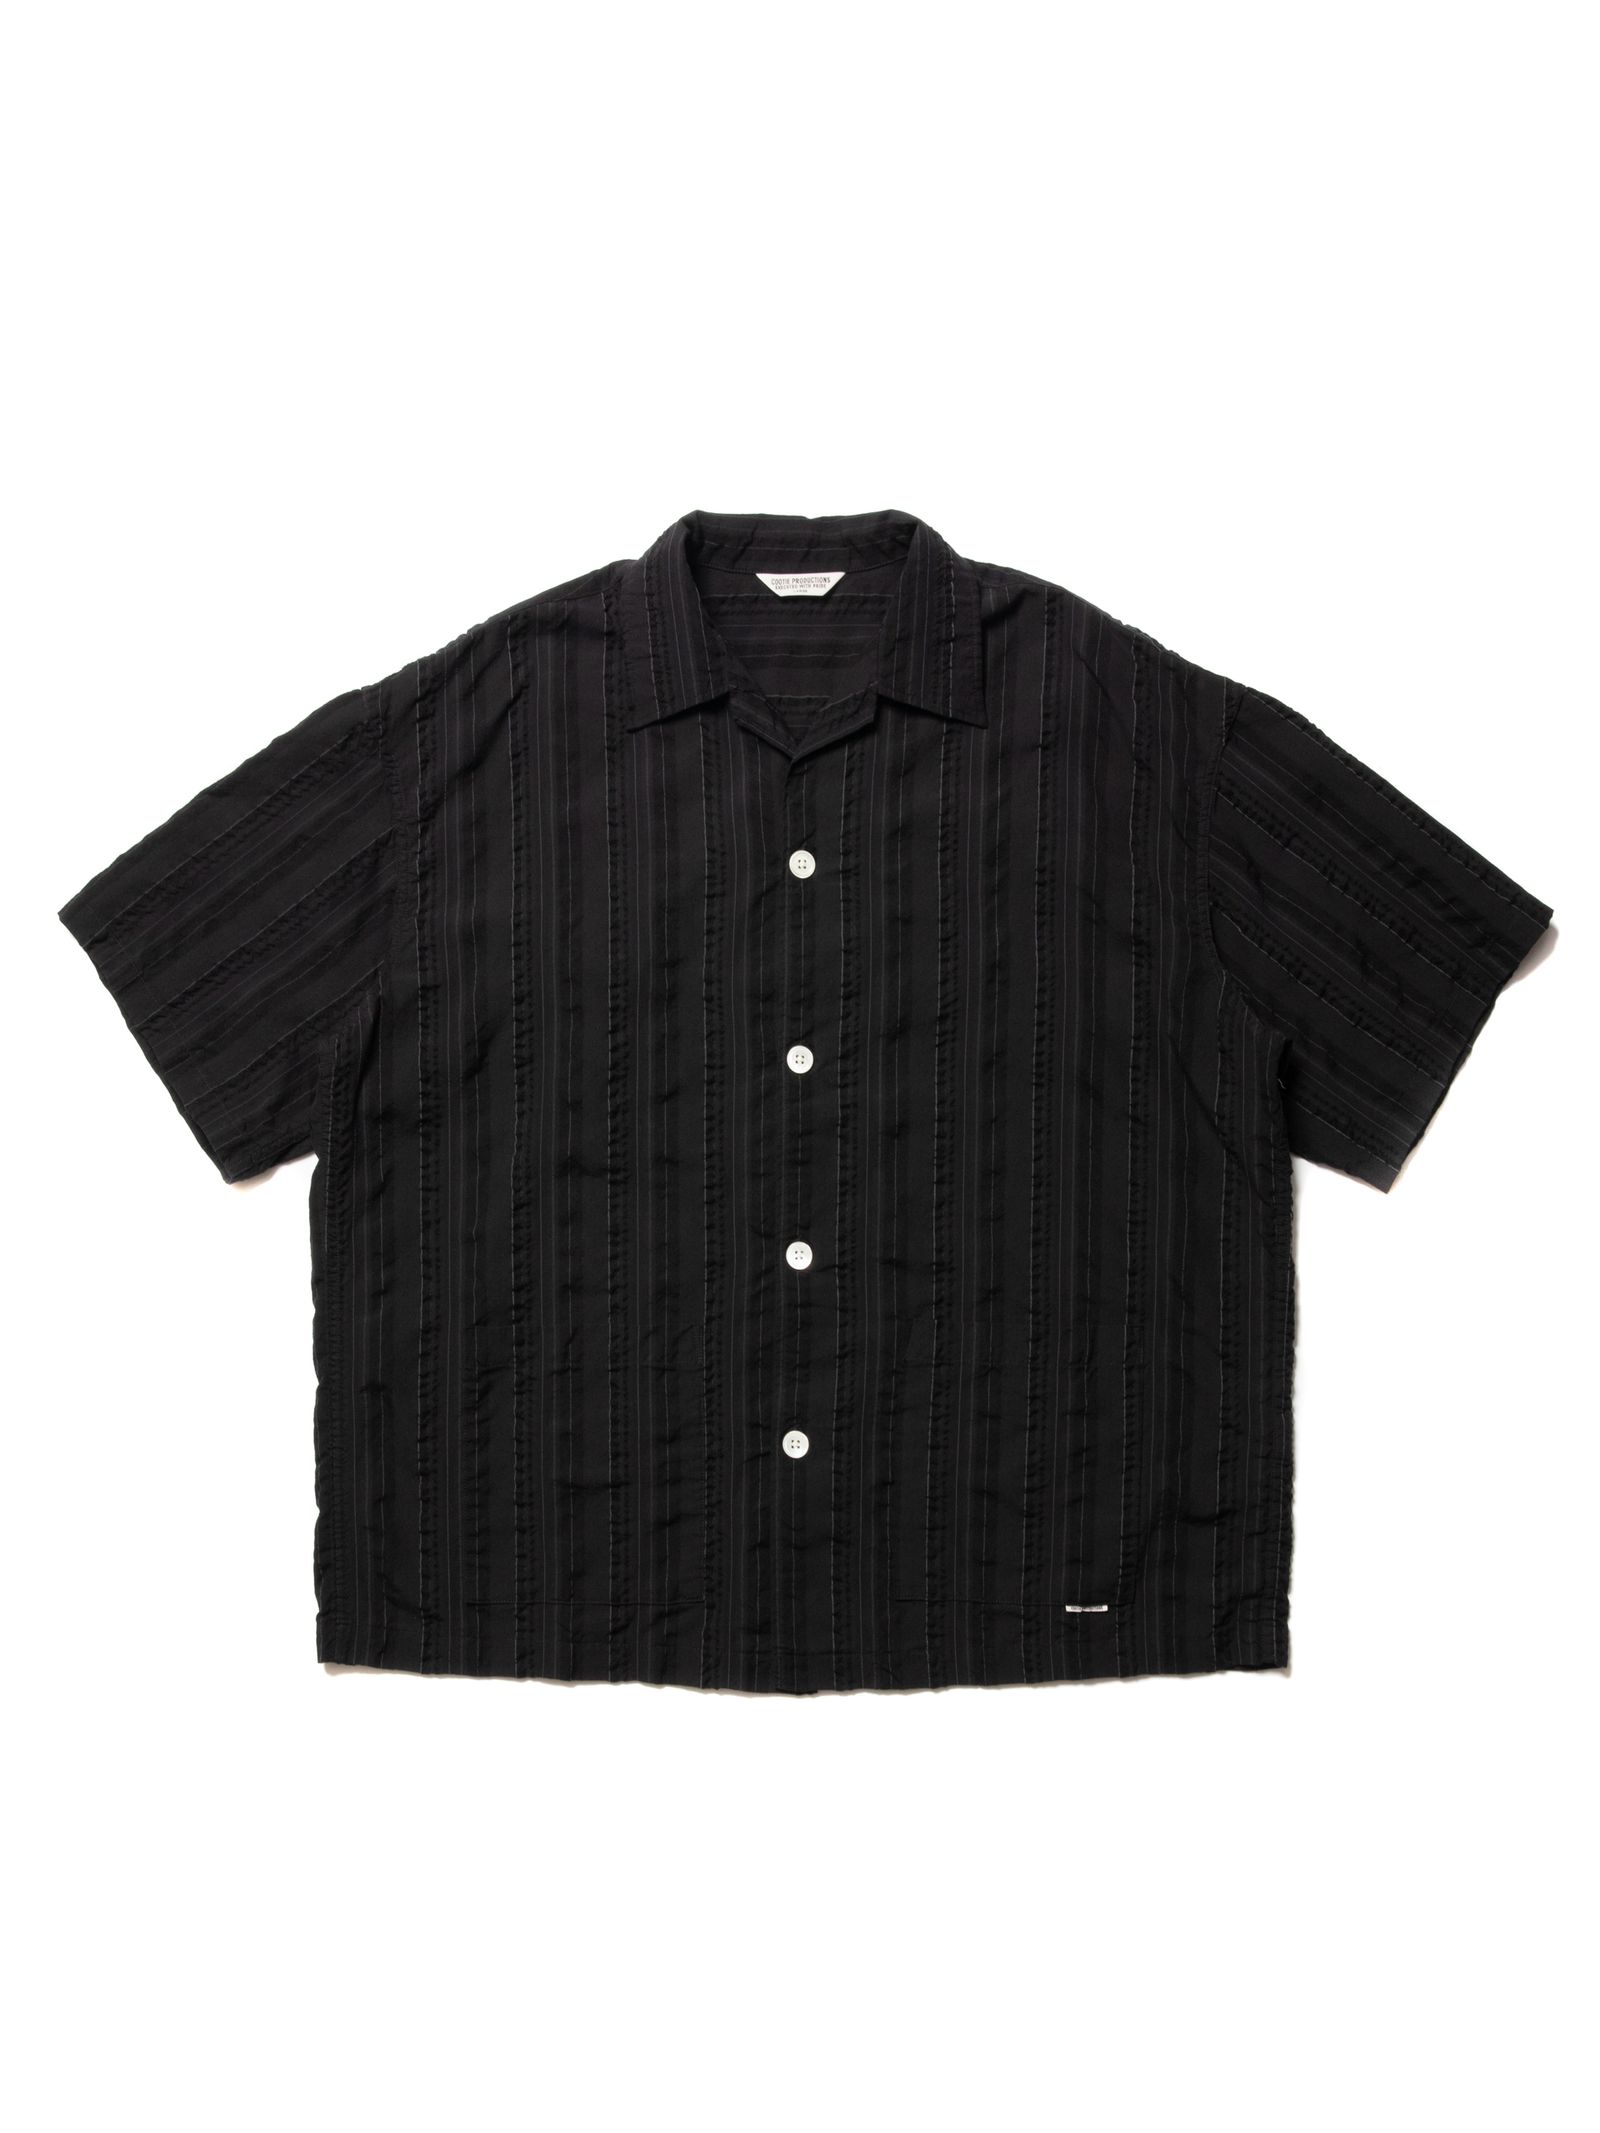 COOTIE PRODUCTIONS - Stripe Sucker Cloth Open Collar S/S Shirt 